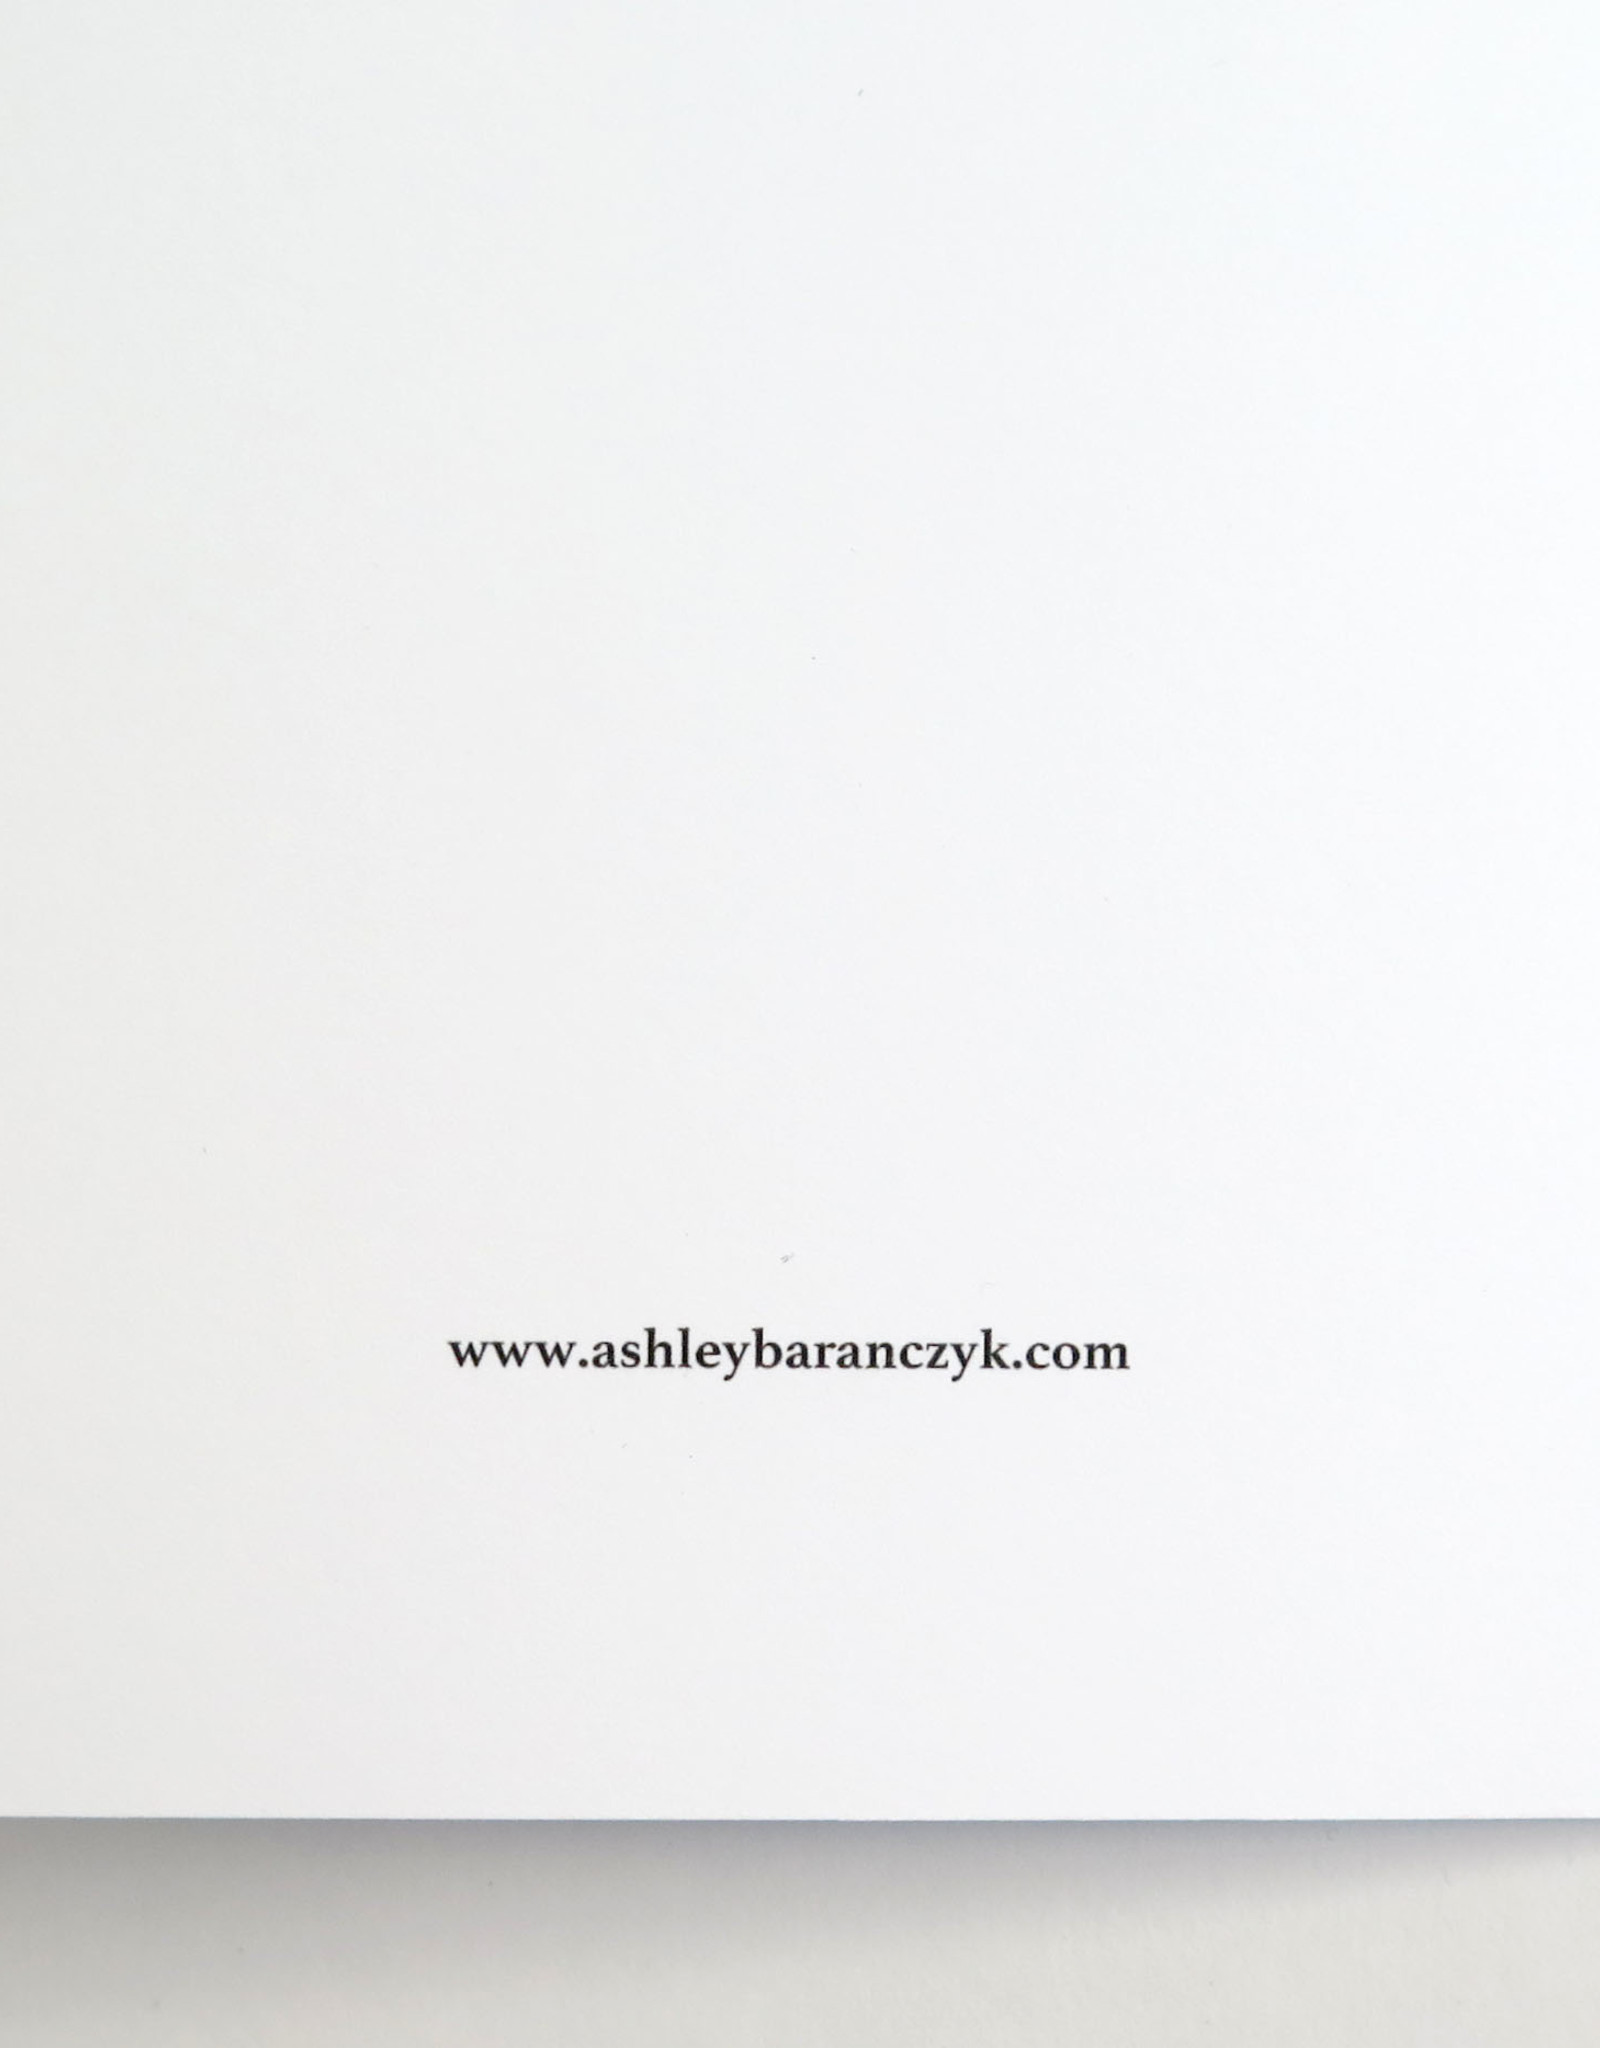 Ashley Baranczyk Set of 5 greeting cards by Ashley Baranczyk